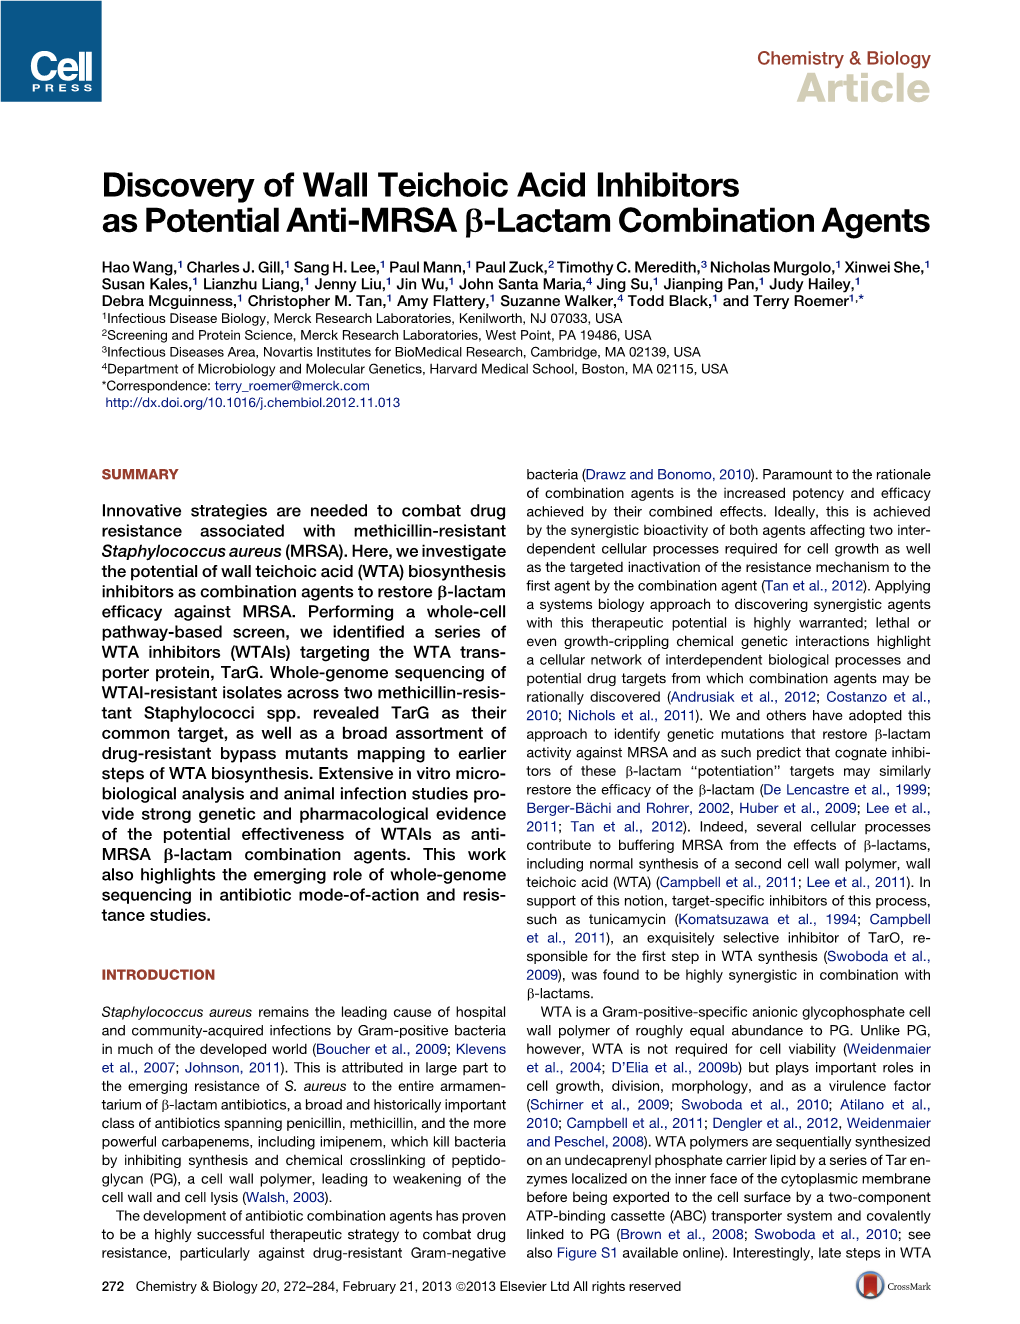 Discovery of Wall Teichoic Acid Inhibitors As Potential Anti-MRSA &Beta